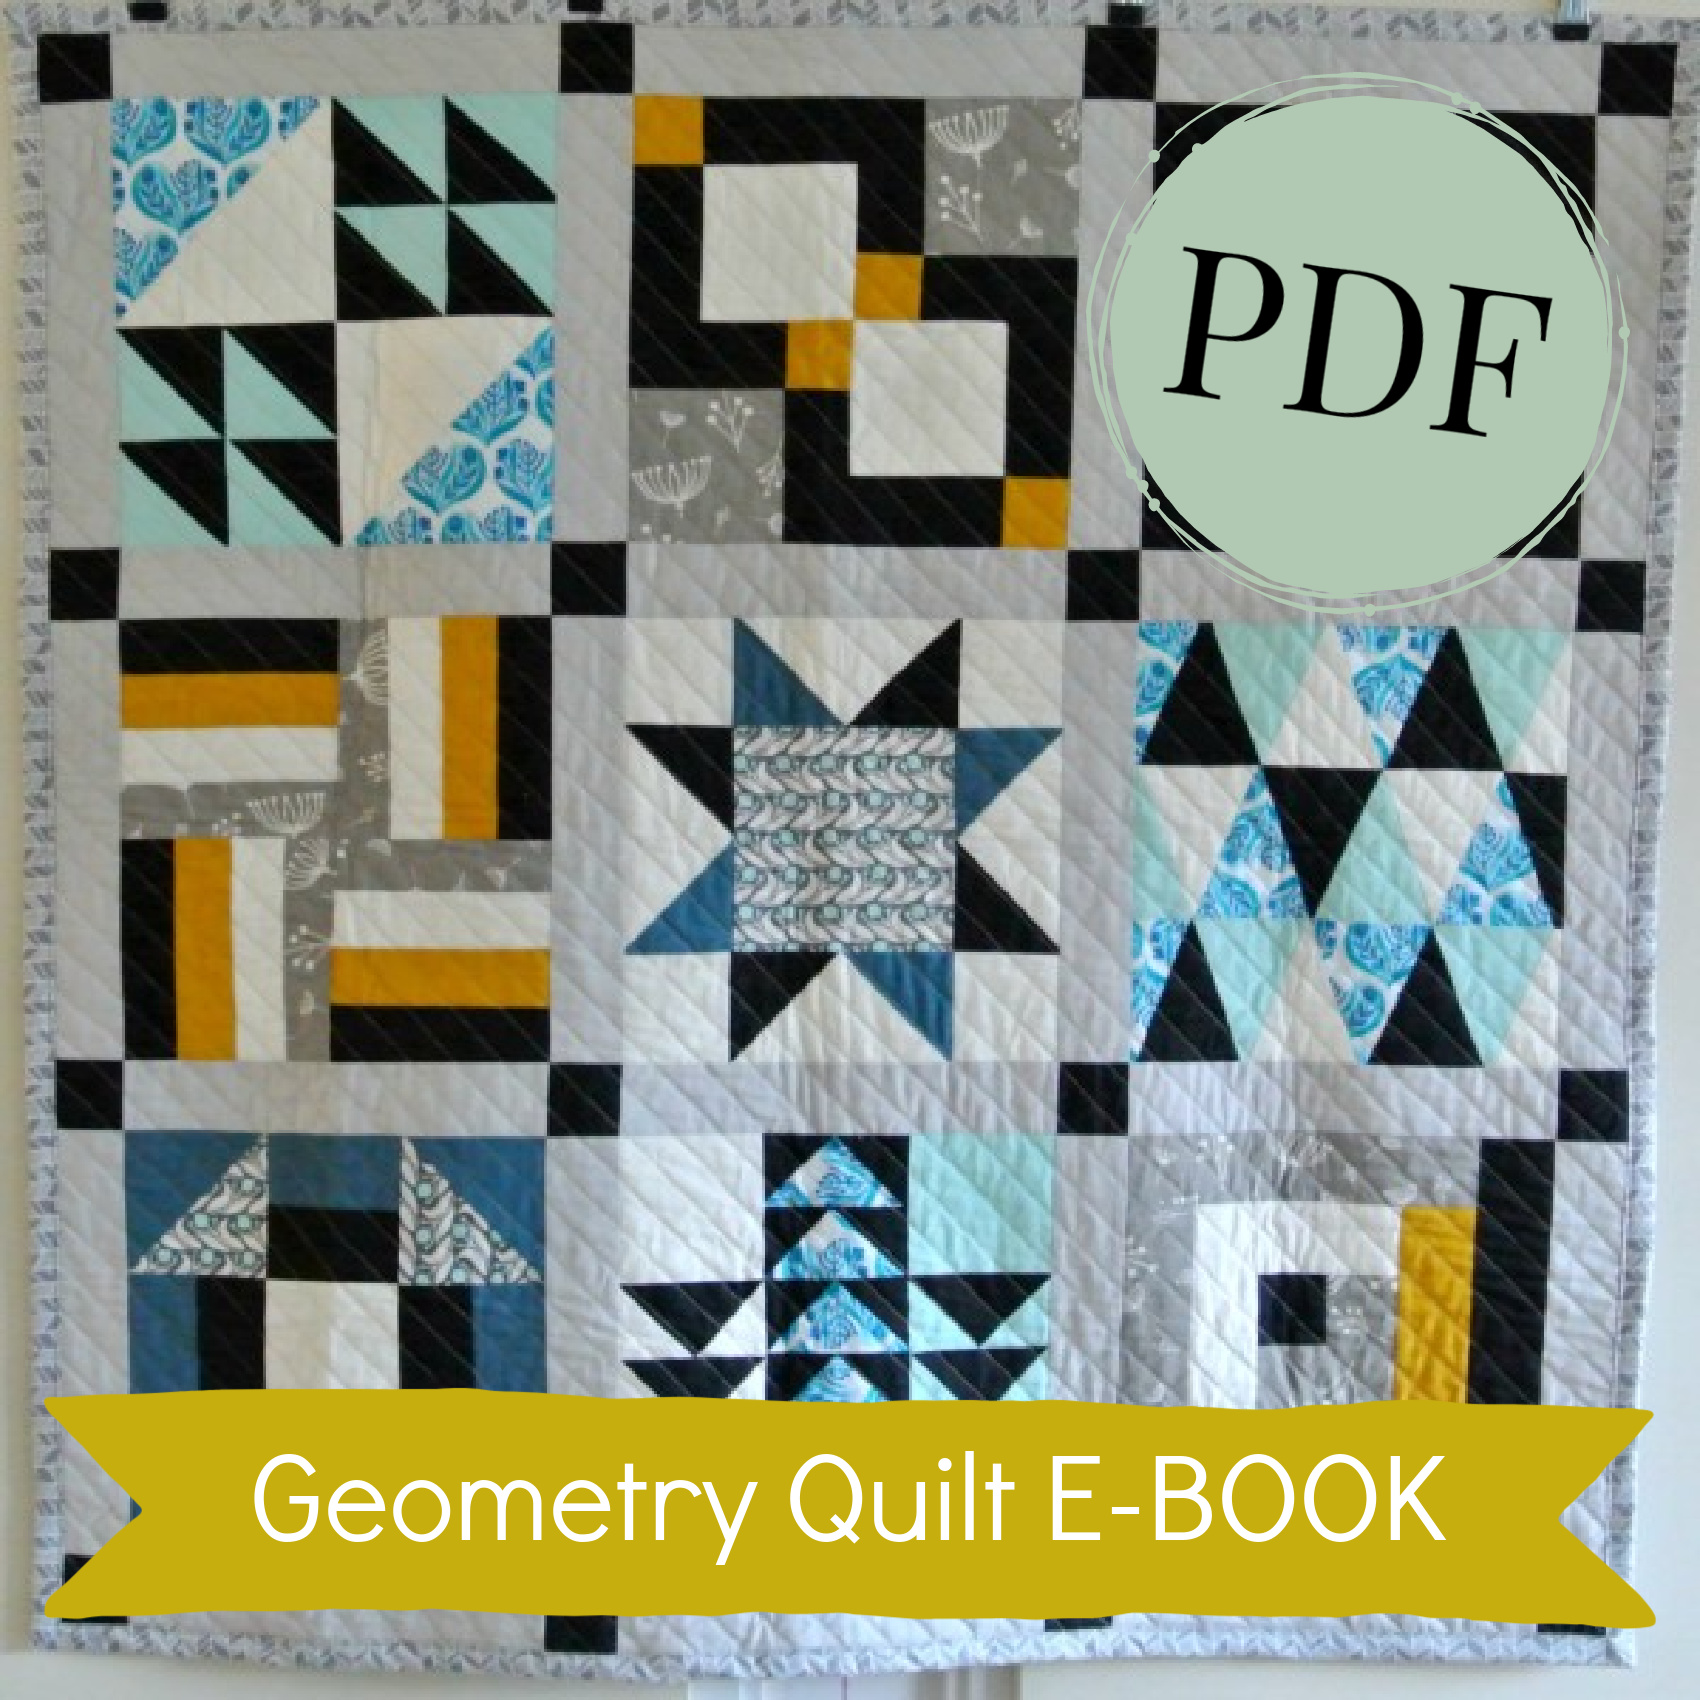 Geometry Quilt E-Book